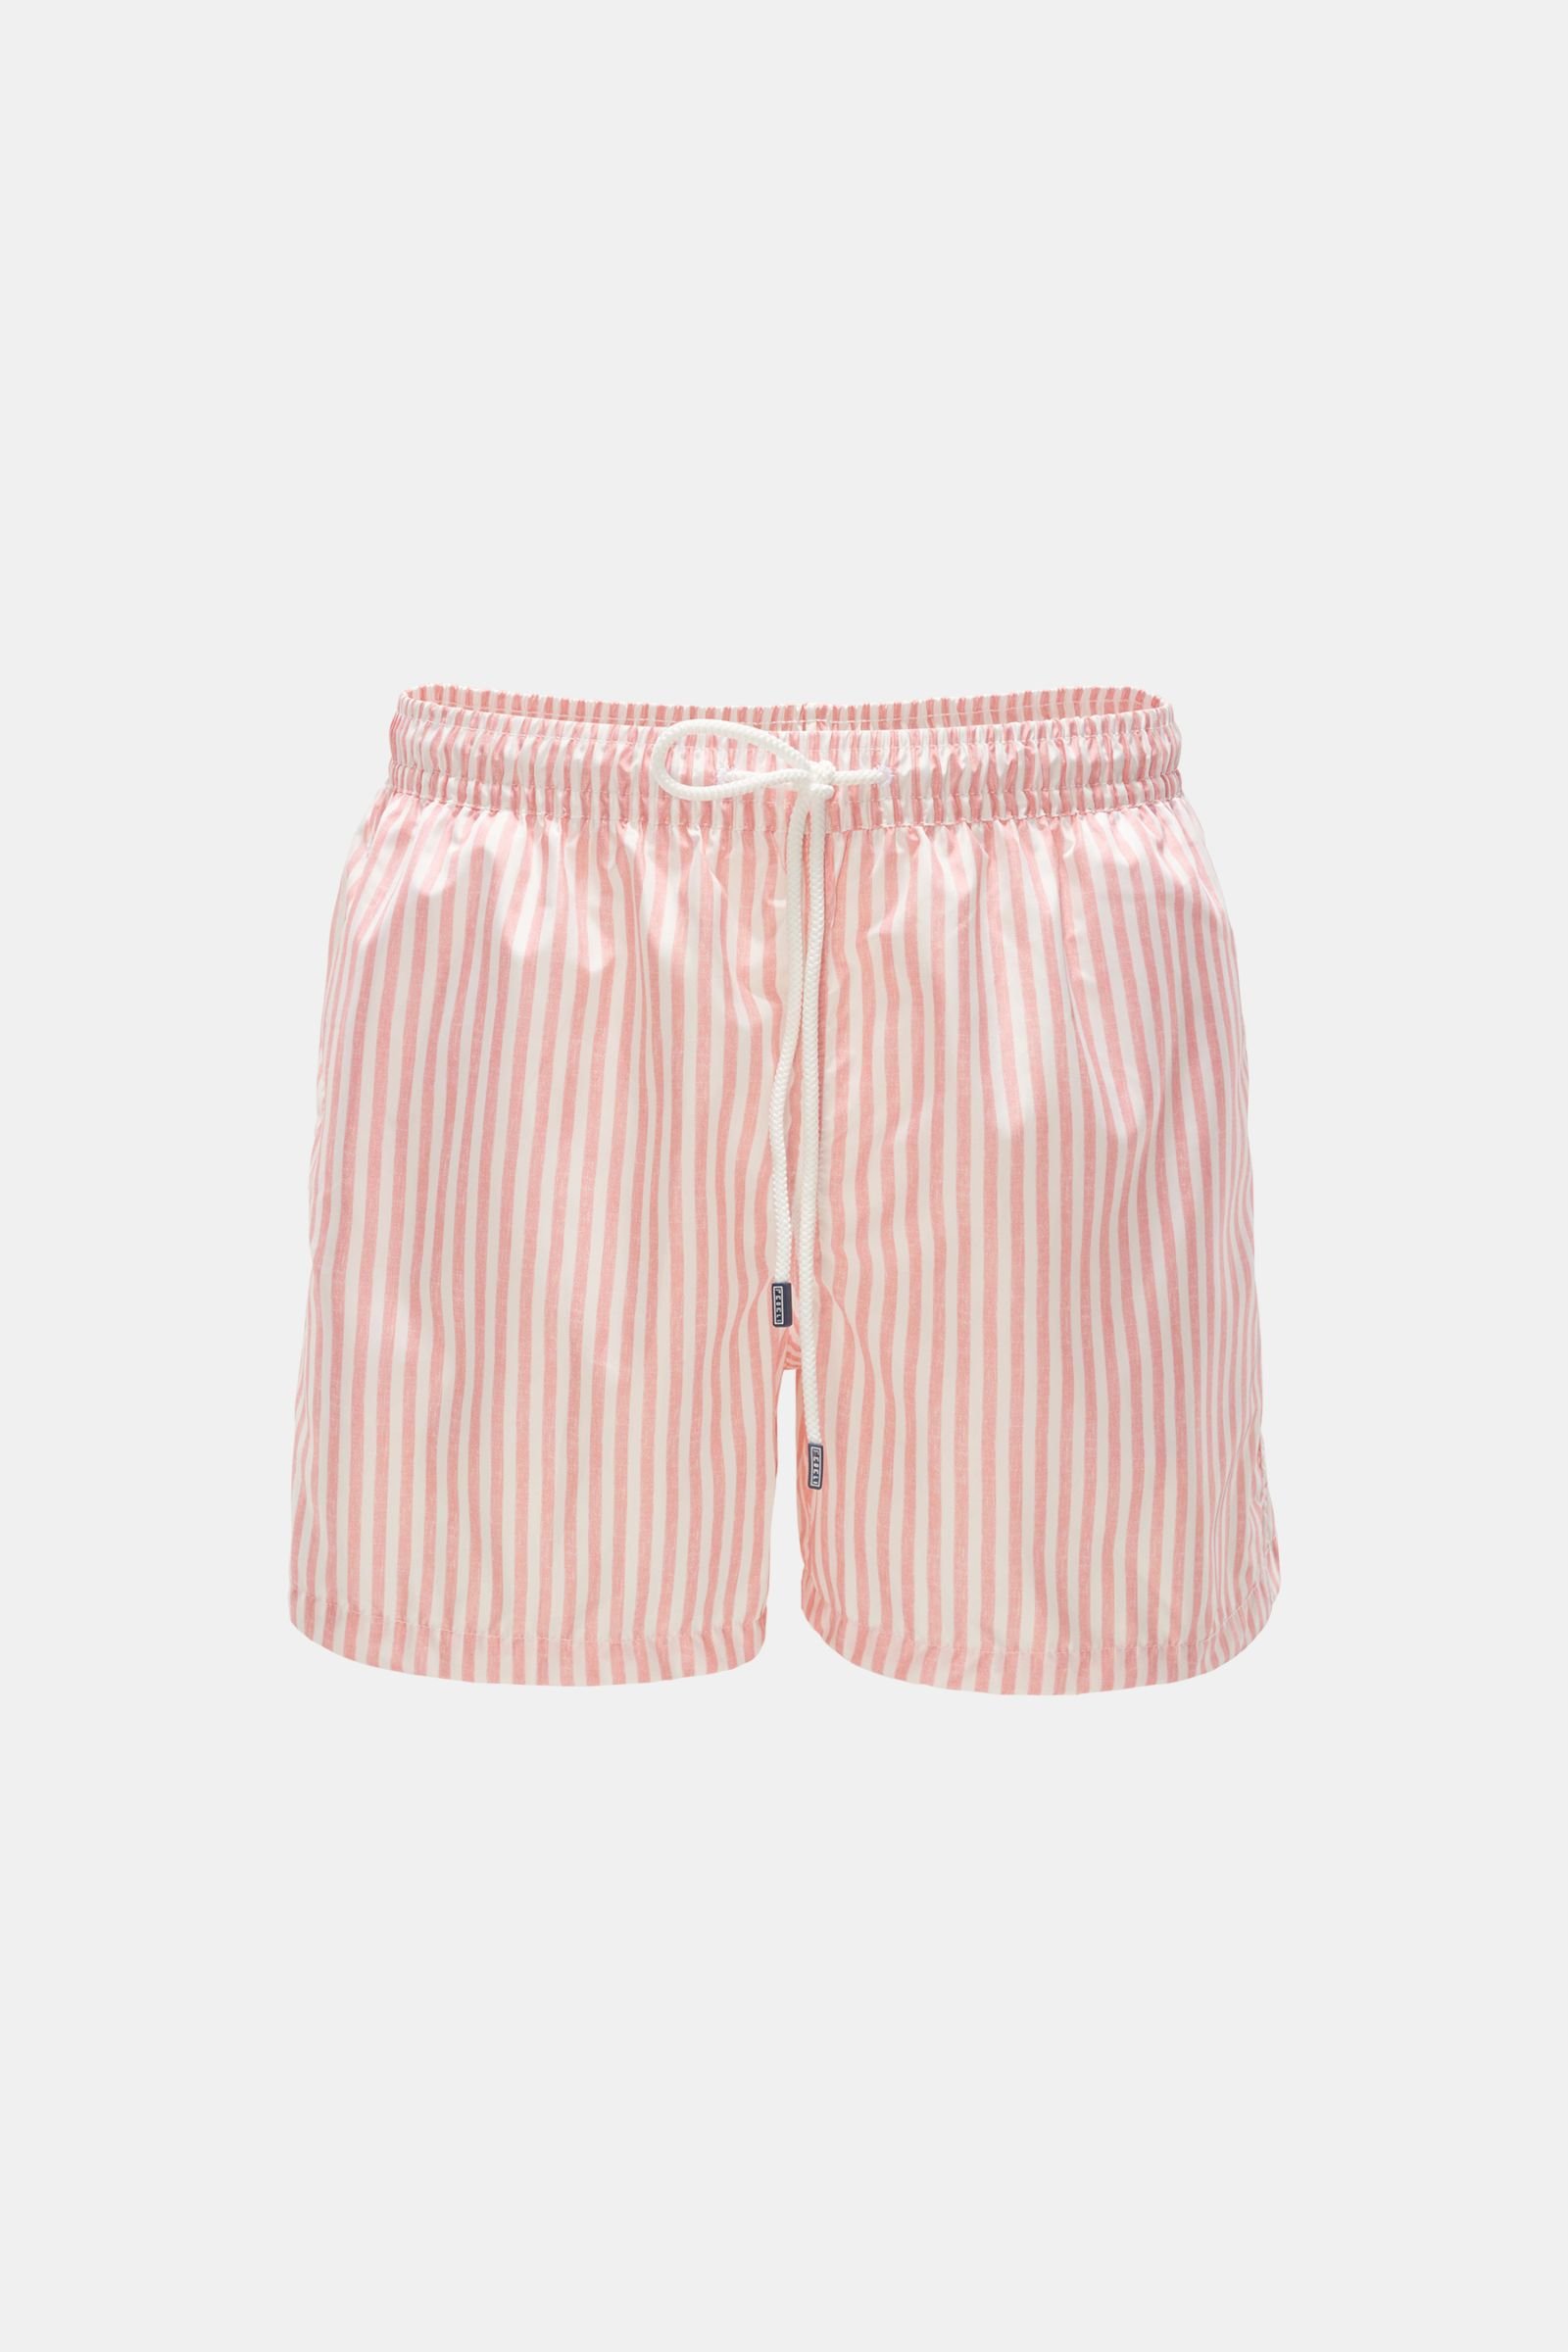 Swim shorts 'Madeira Airstop' rose/white striped